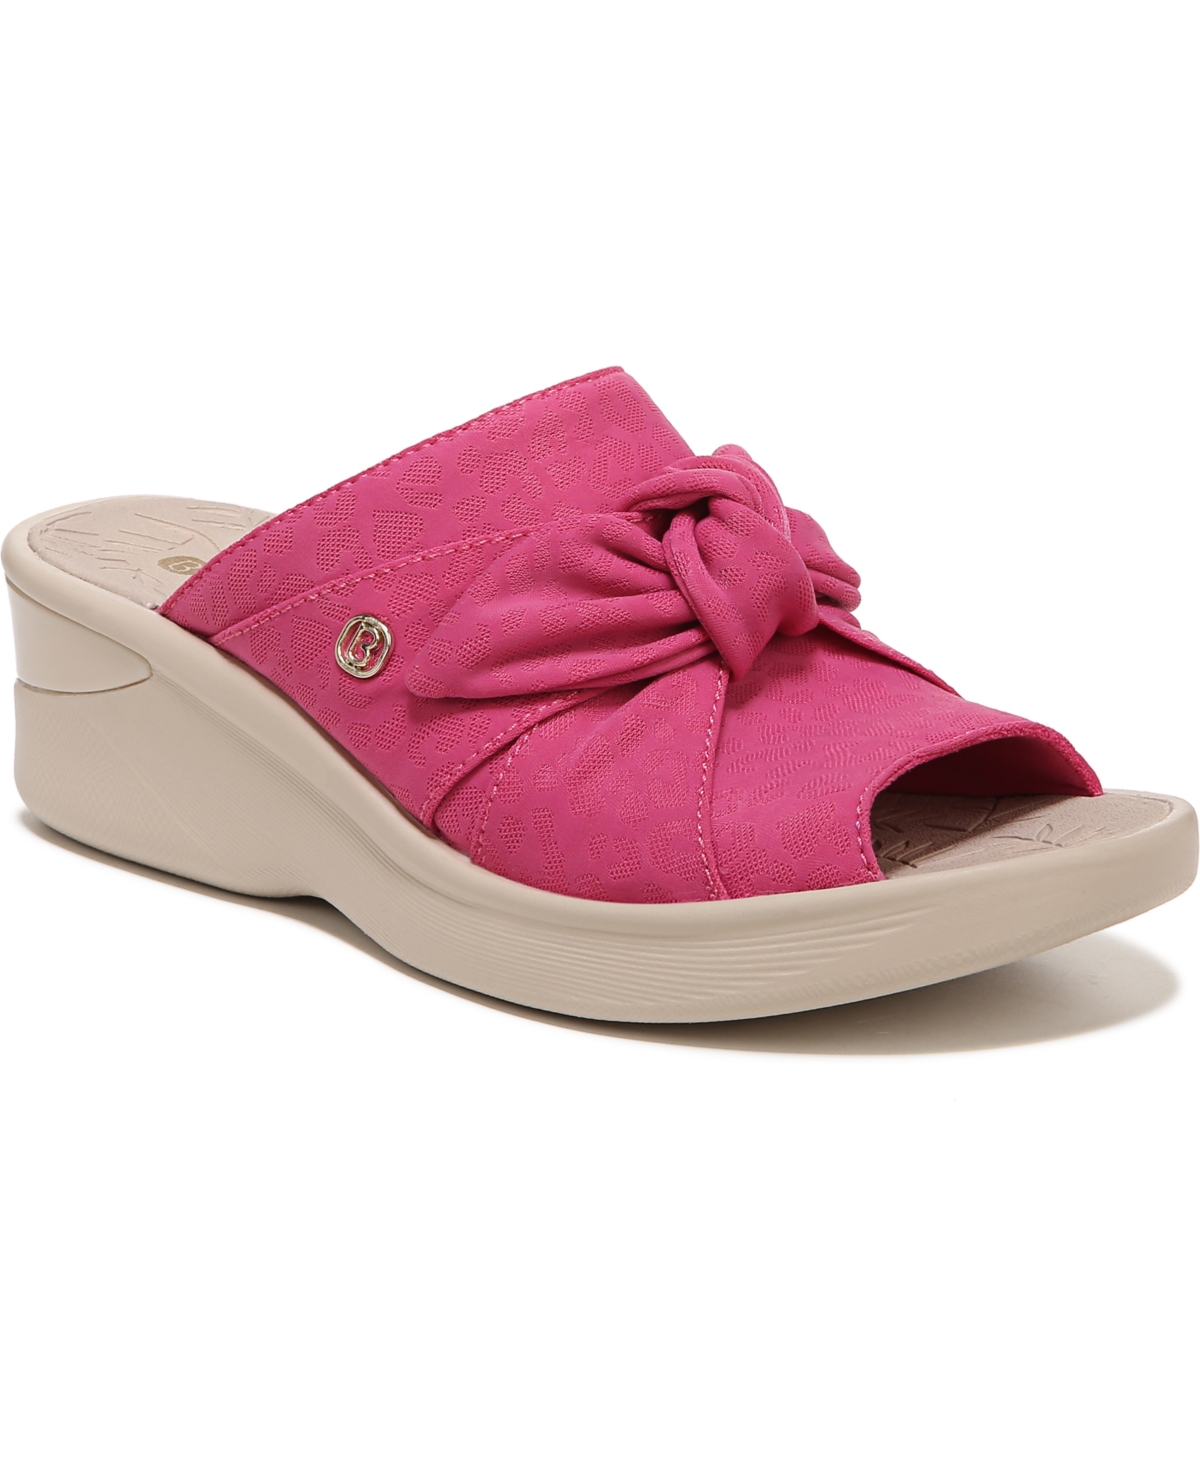 Smile Washable Slide Wedge Sandals - Pink Cheetah Fabric